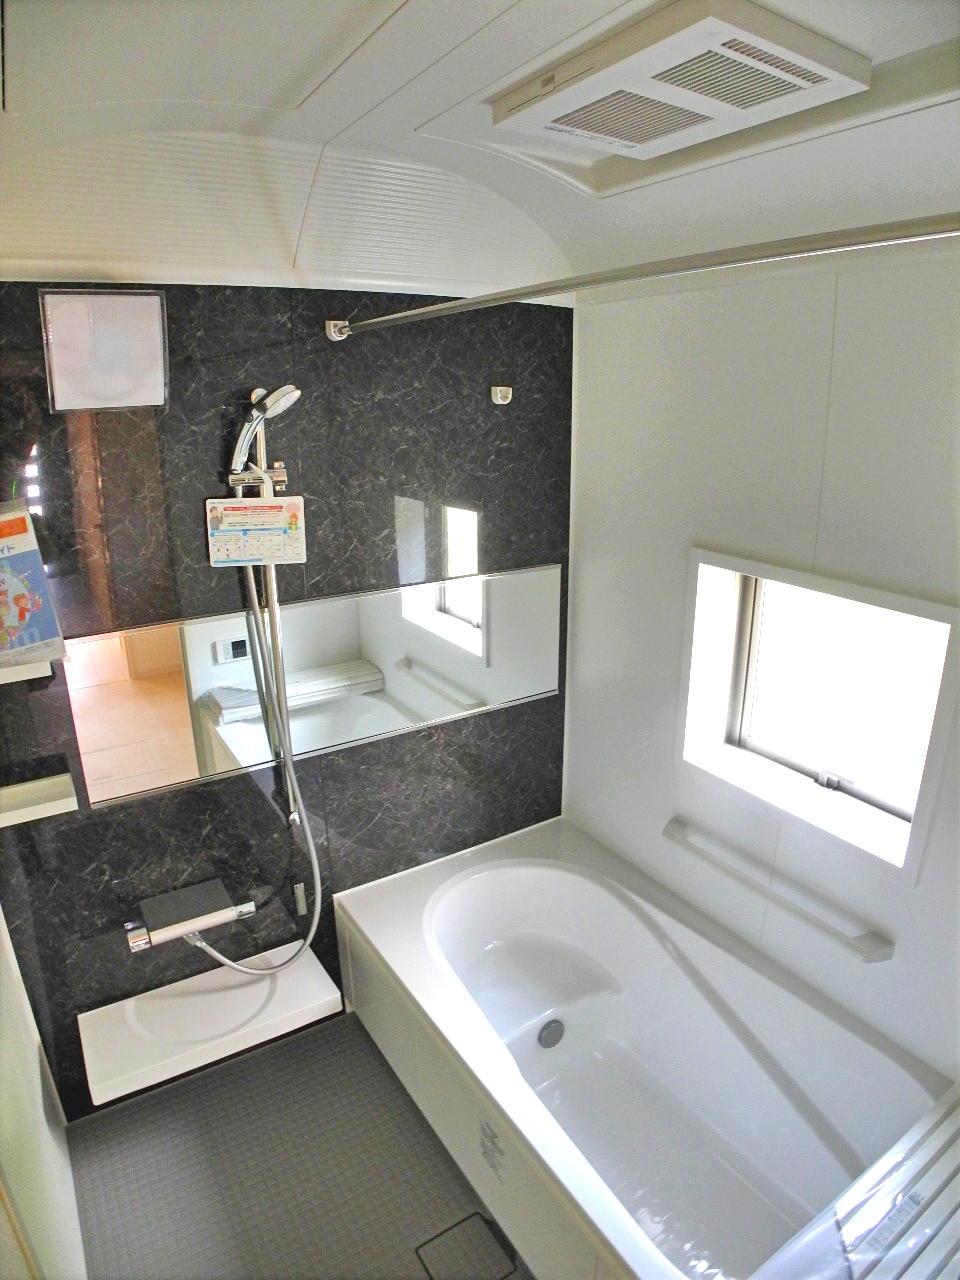 Same specifications photo (bathroom). Bathroom (image photo)